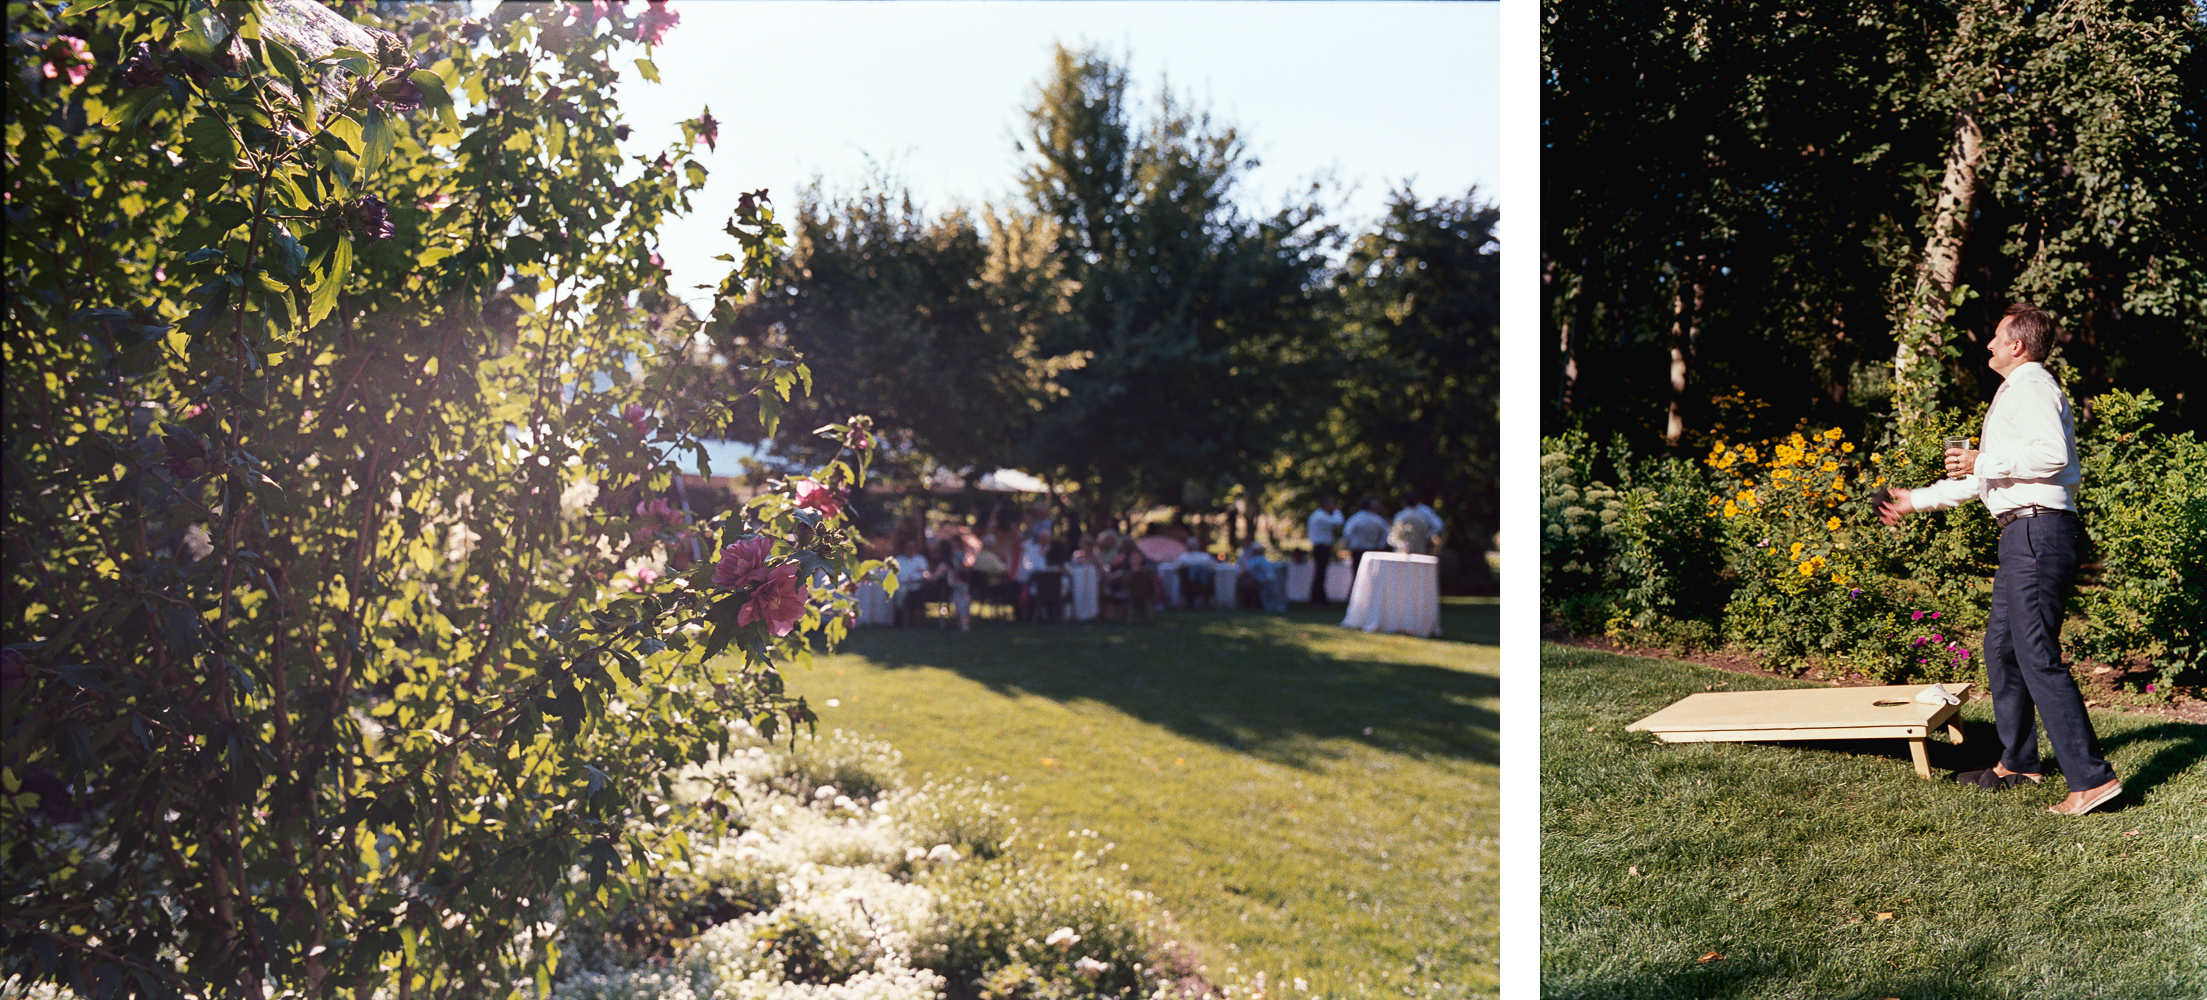 Linden-Gardens-Wedding-Venue-Okanagan-Penticton-Photography-Film-Analog-35.PNG